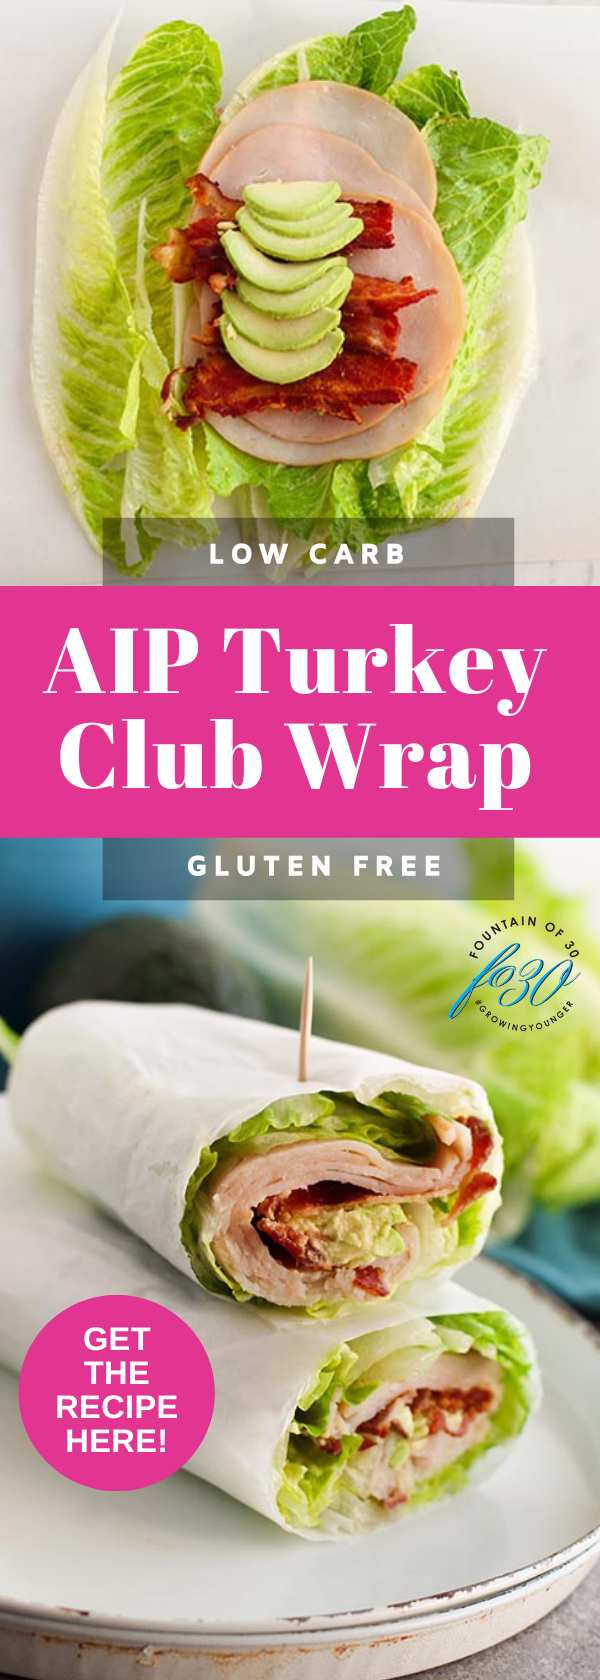 AIP diet turkey club lettuce wrap fountainof30